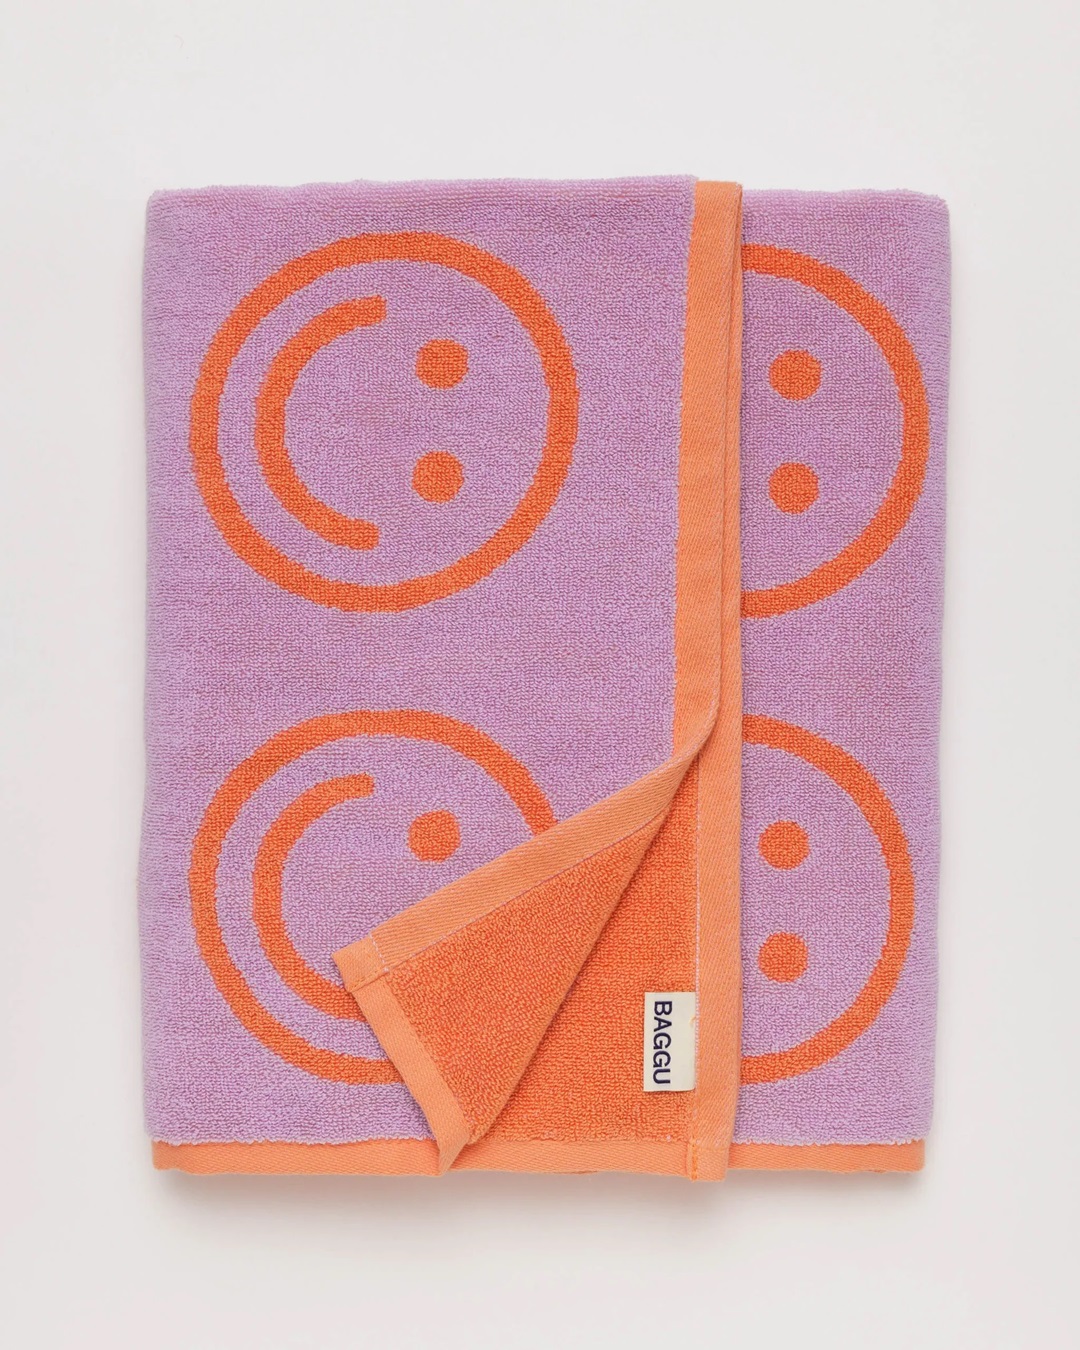 Orange and purple smiley face towel folded